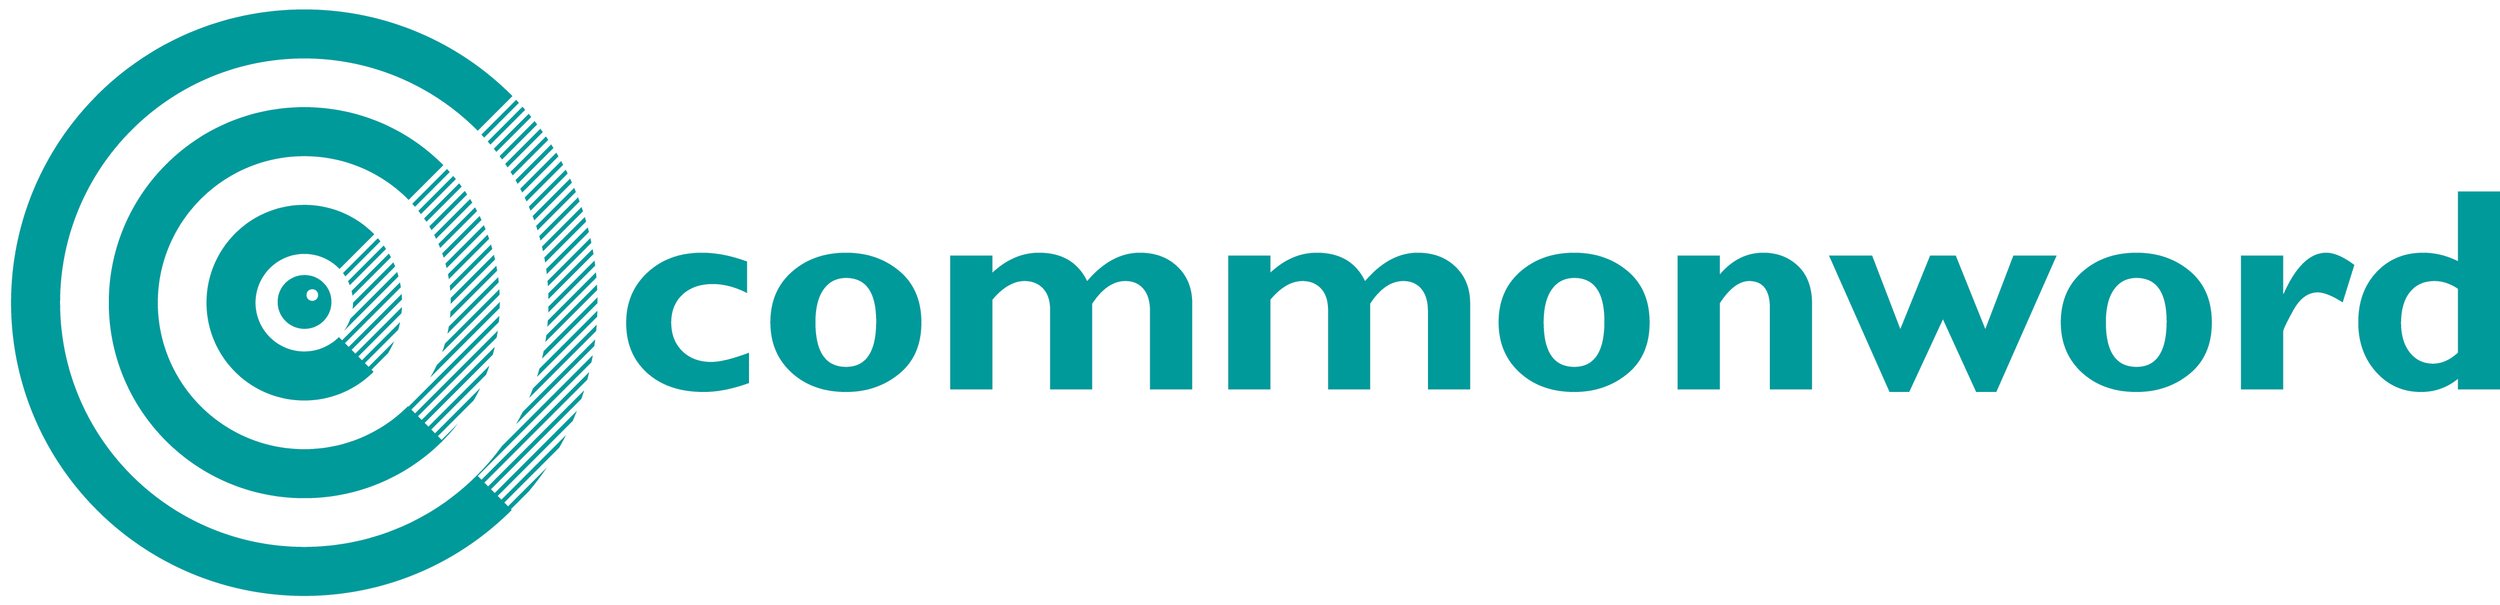 Commonword logo.jpg